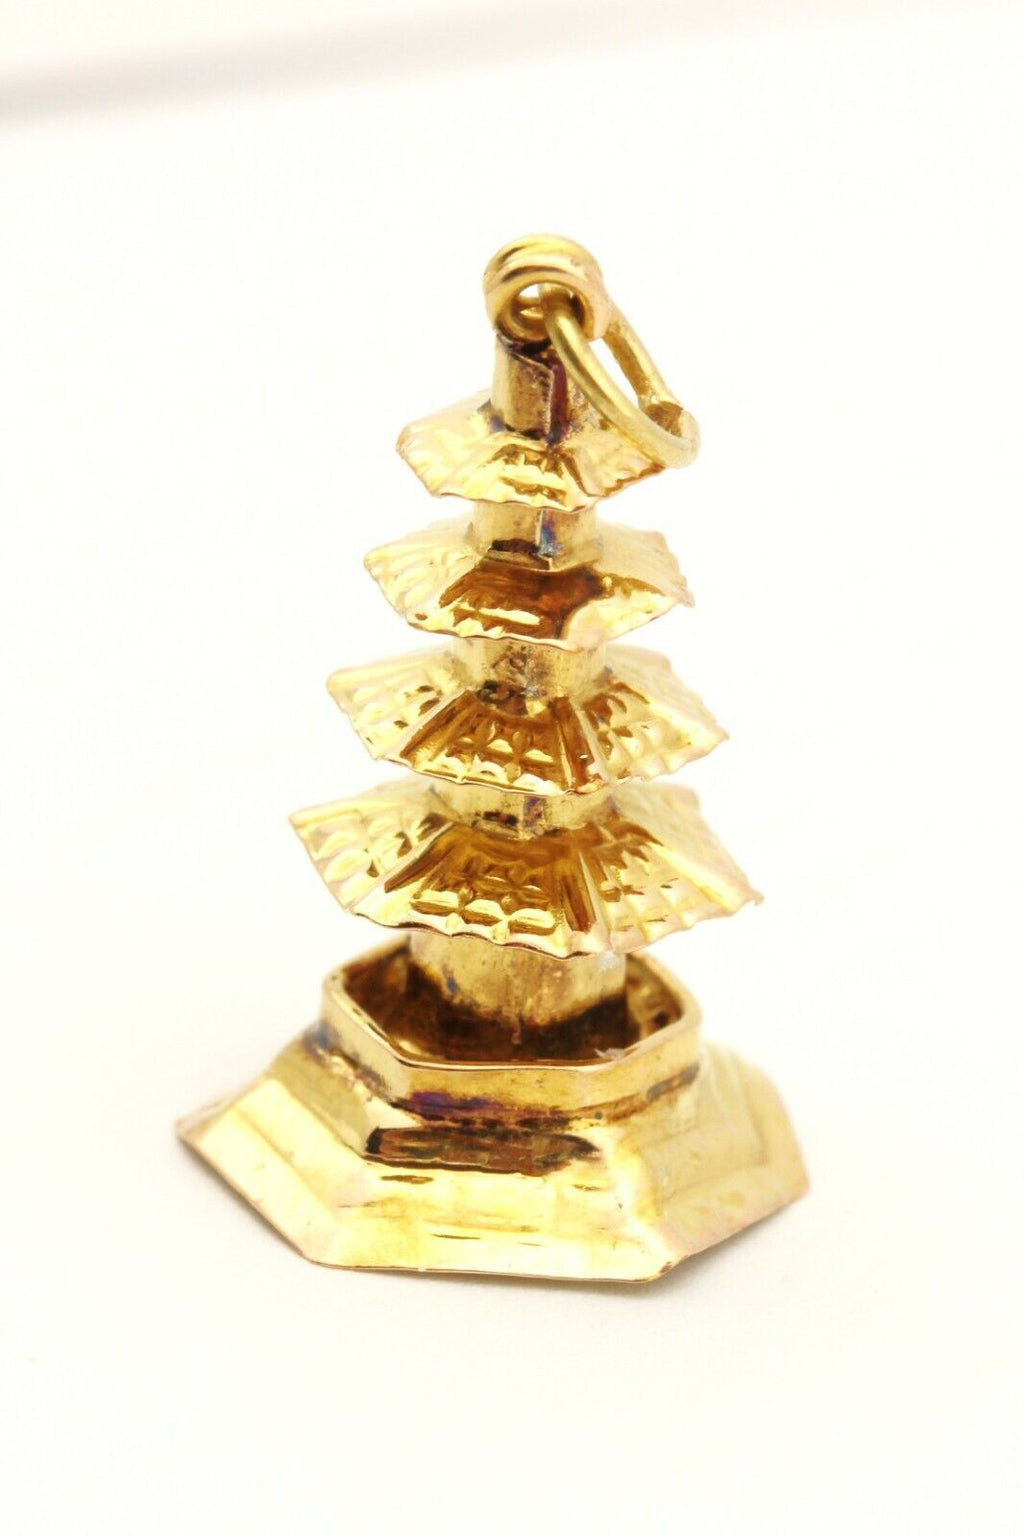 585 14k yellow gold Japanese pagoda charm pendant 1 inch 1.23g vintage estate